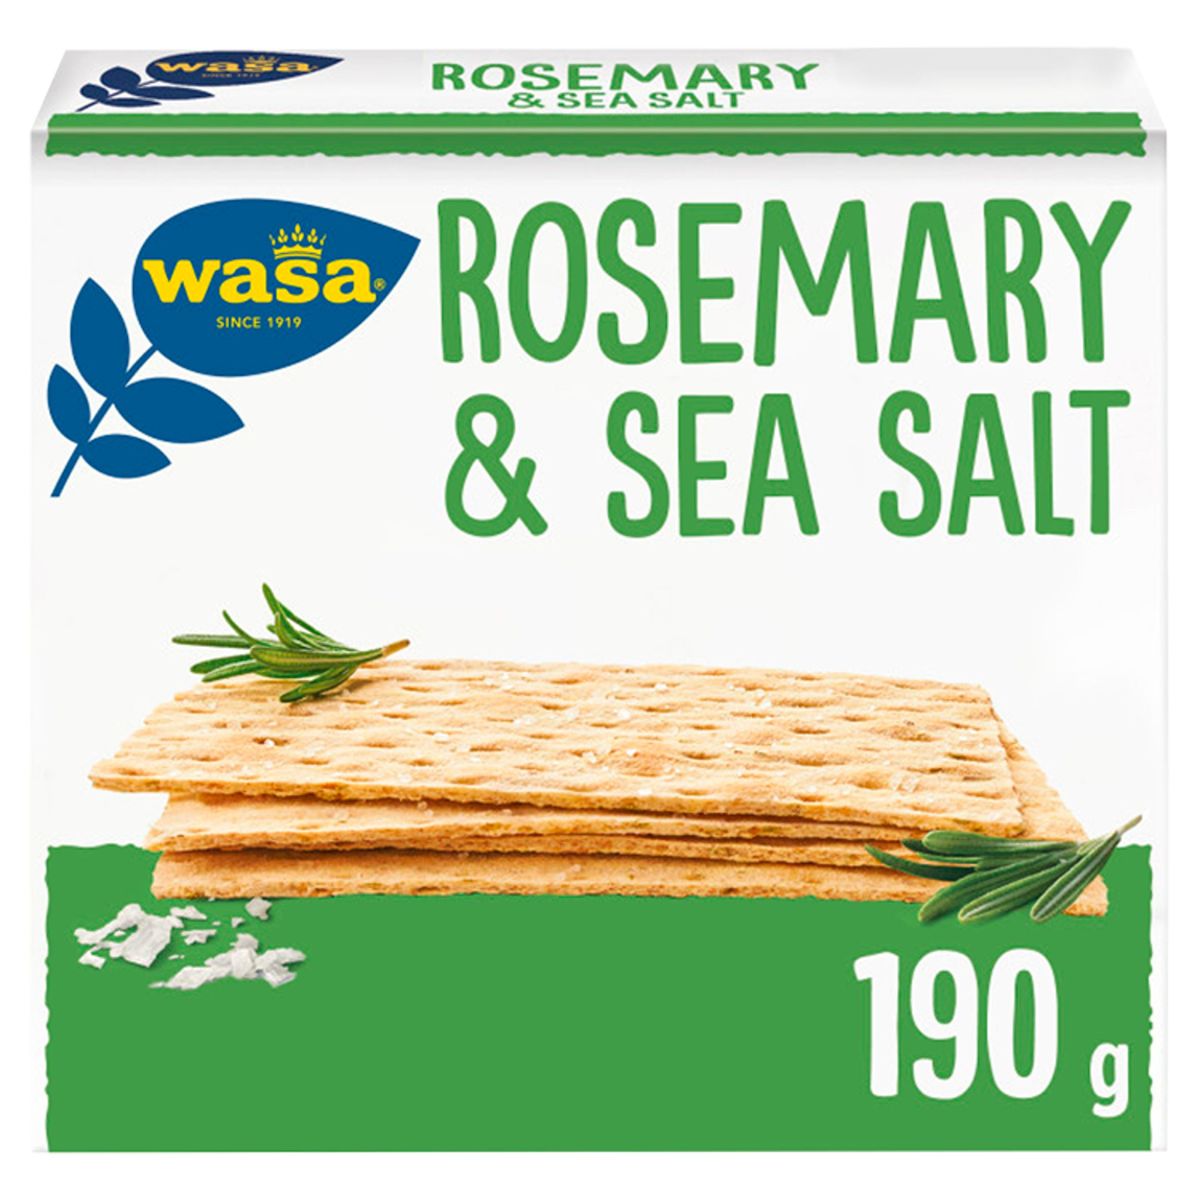 Wasa Delicate Crisp Rosemary & Sea Salt 190 g